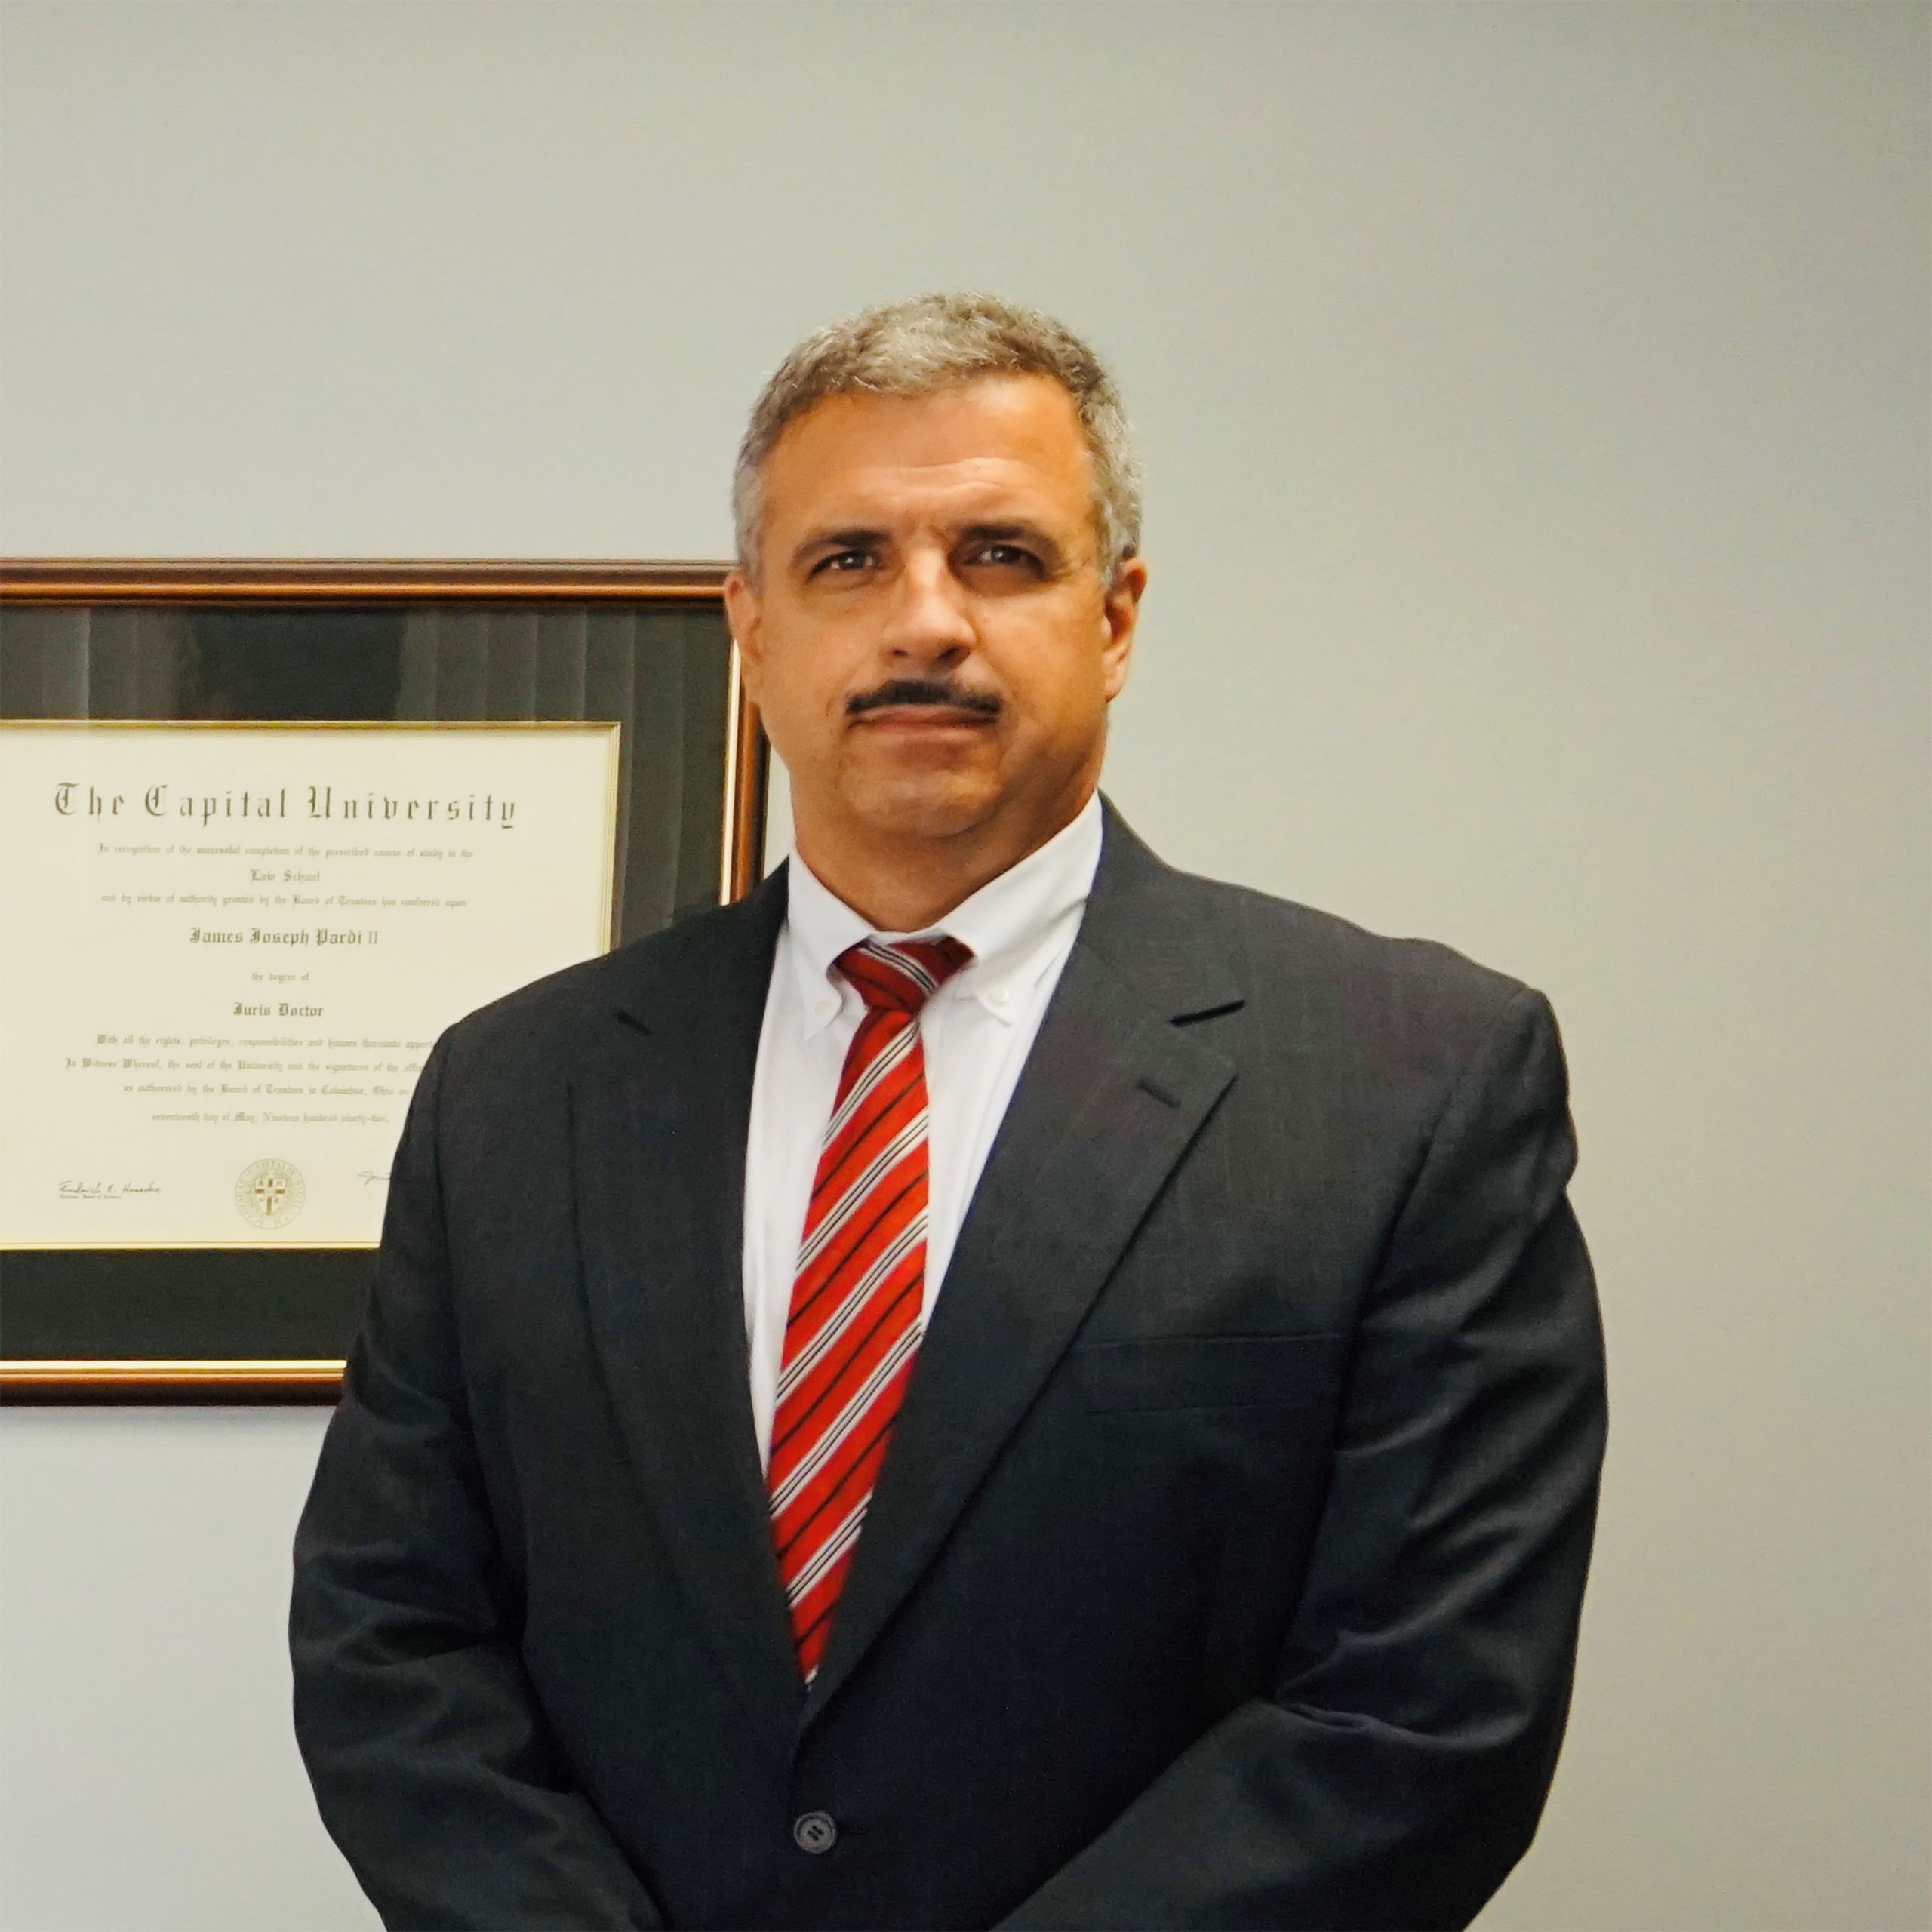 Image of attorney James J. Pardi II